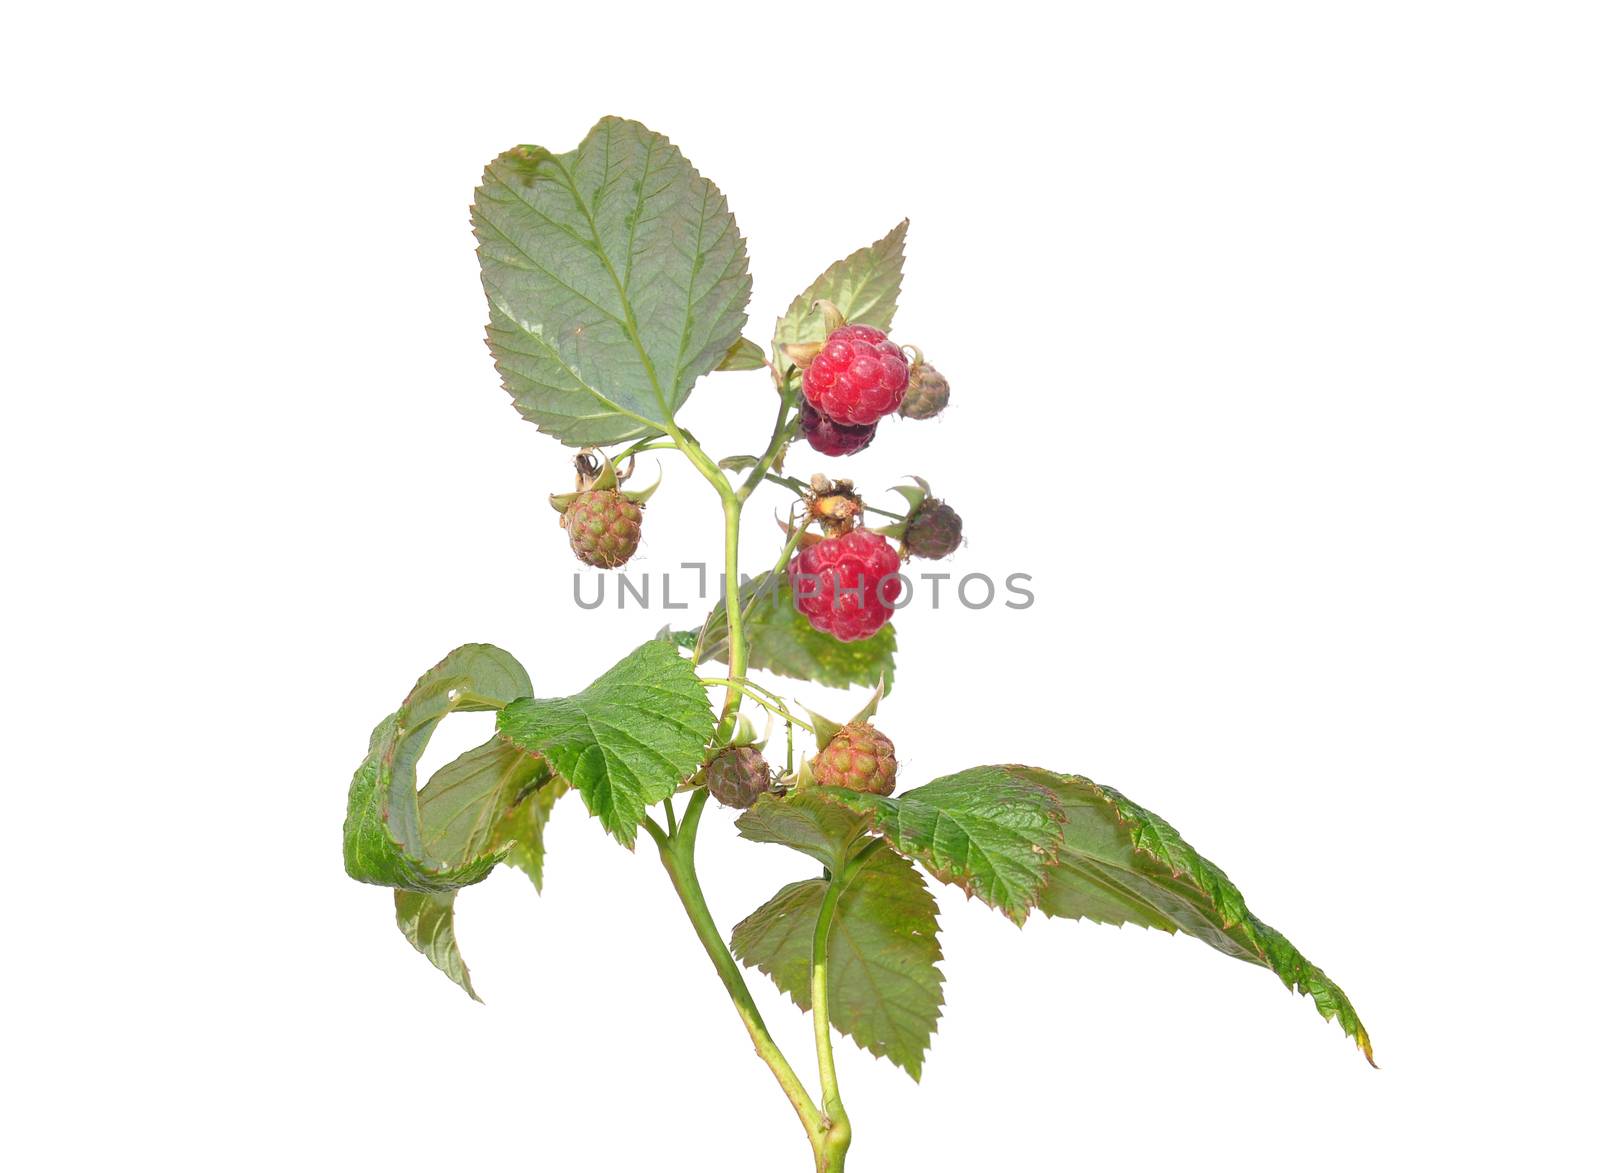 Raspberry (Rubus idaeus) by rbiedermann